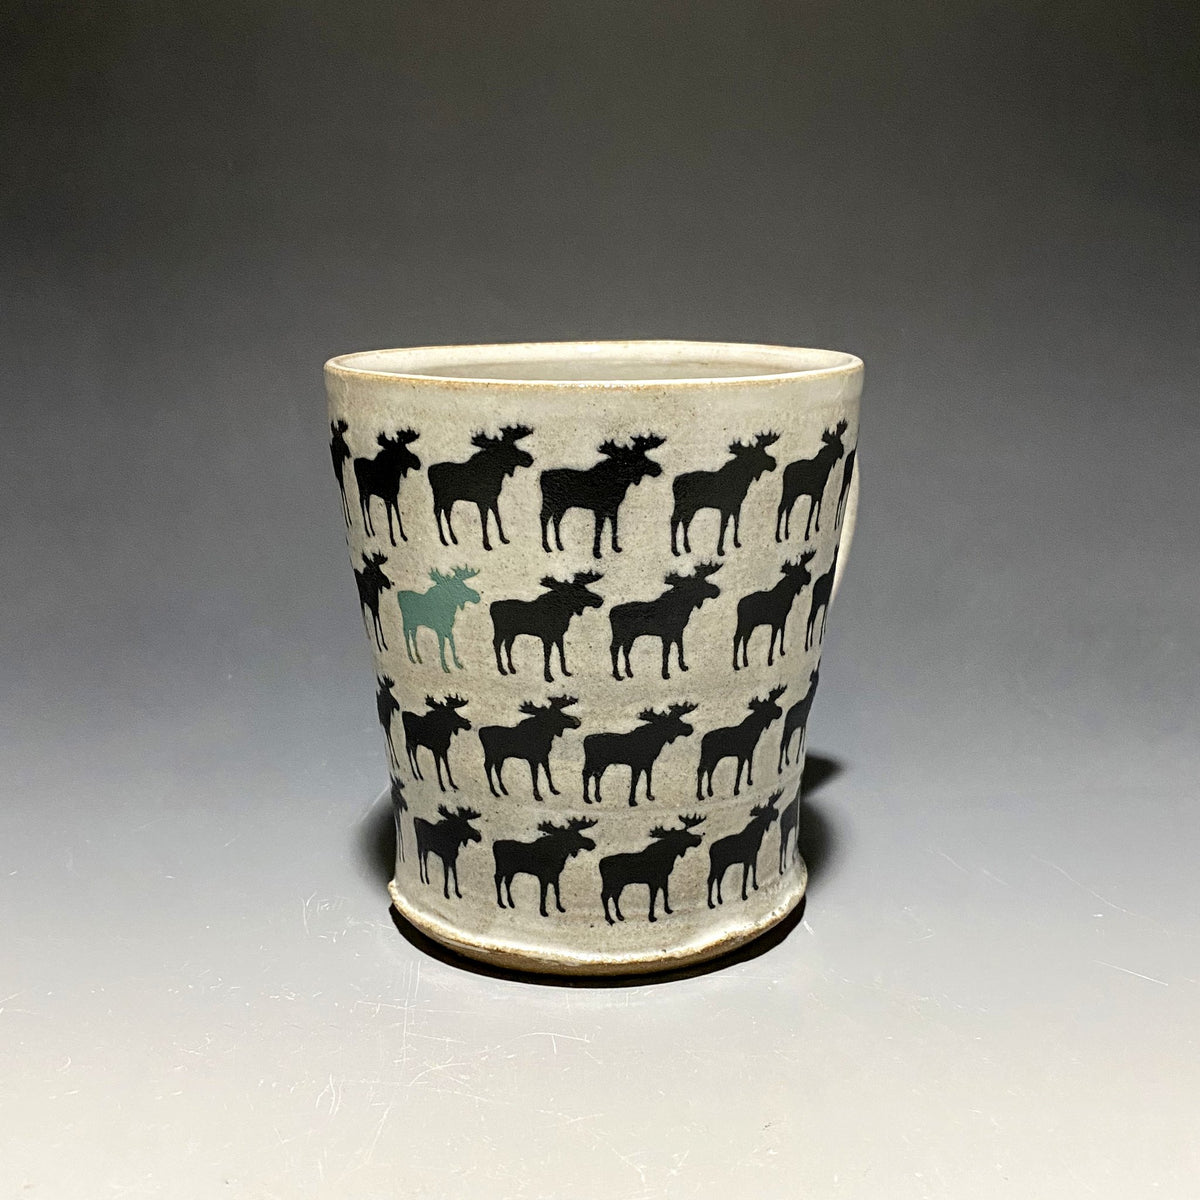 15oz Ceramic Mug featuring repeating black moose and one blue bear